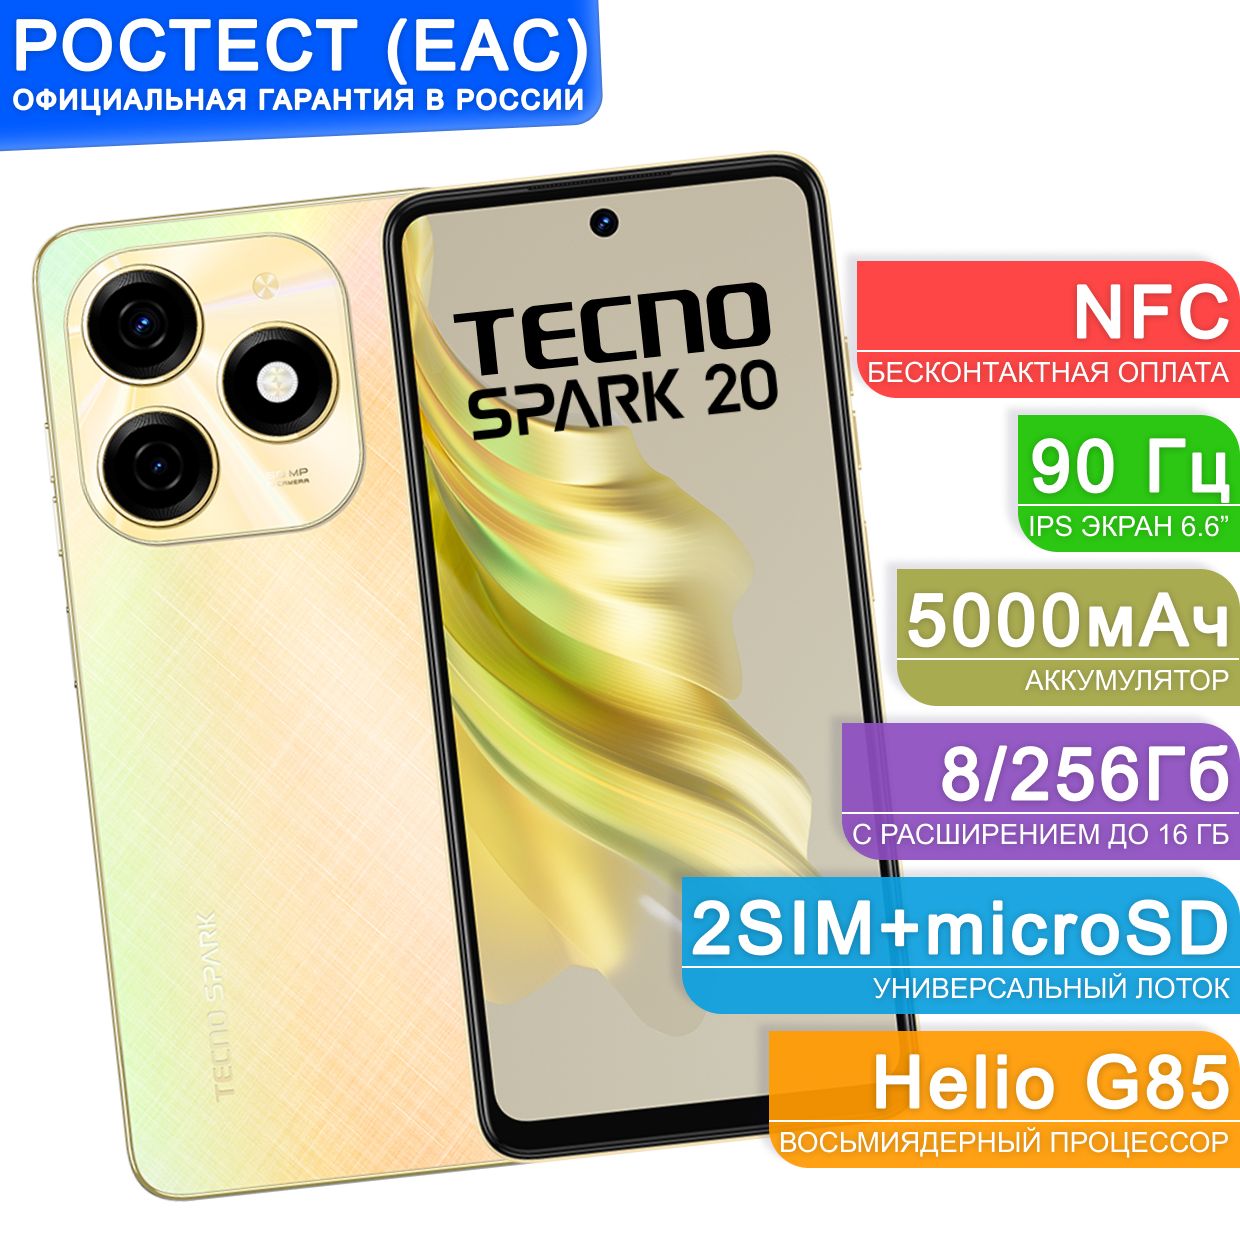 TecnoСмартфонSPARK20"8ядер(2ГГц),2SIM,IPS,1612x720,90Гц,камера50+0.08Мп,селфи-камера32Мп,NFC,4G,GPS,FM,5000мА*ч"Ростест(EAC)8/256ГБ,золотой